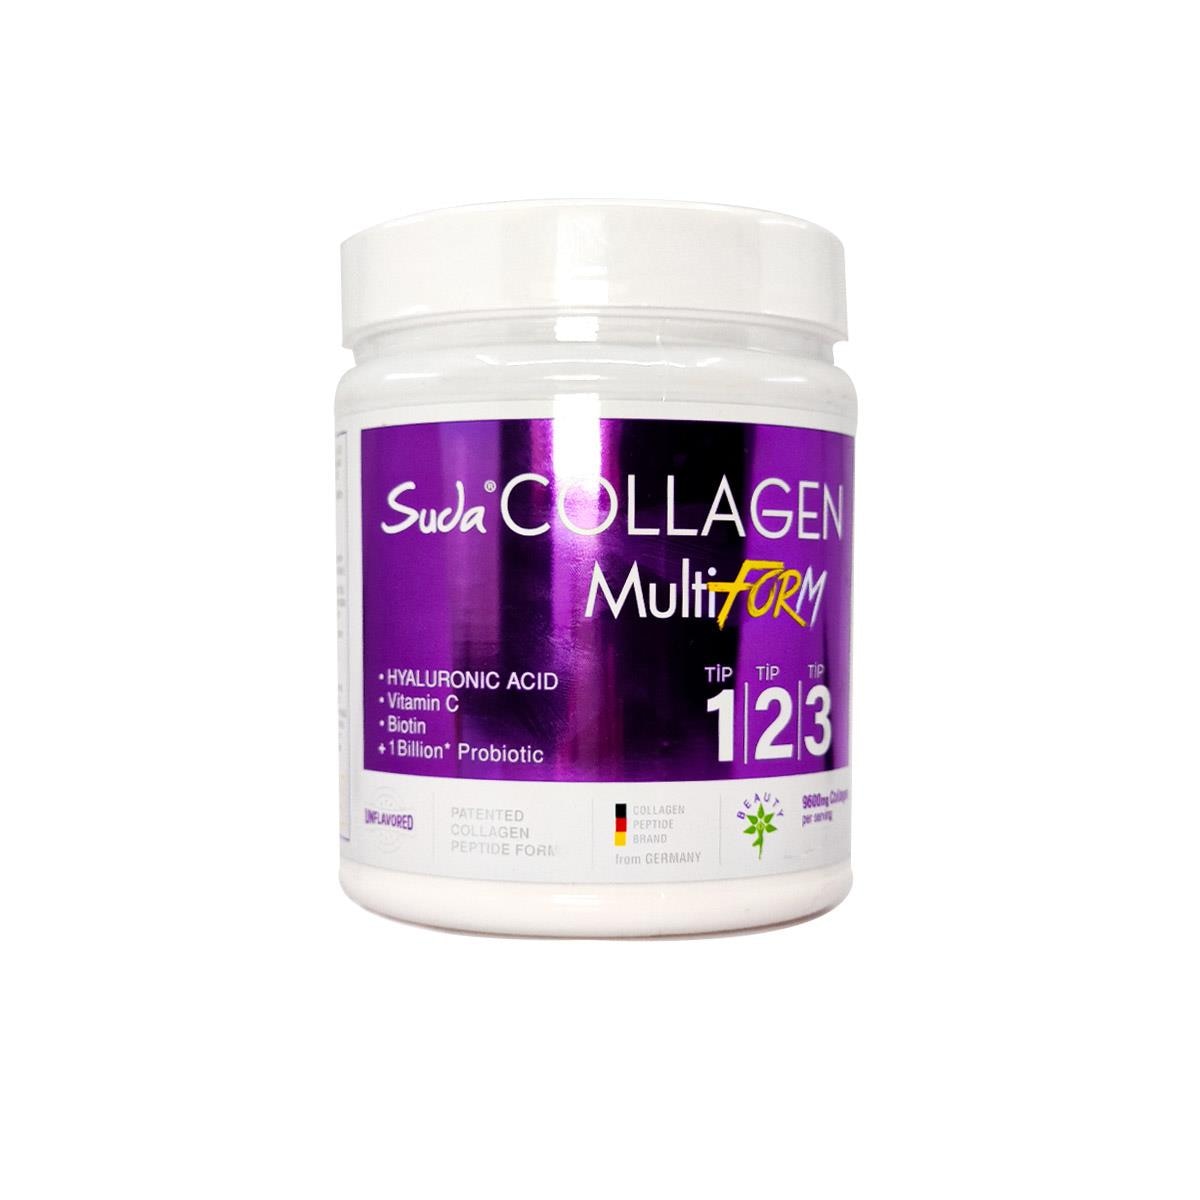 Suda Collagen Multi form. Suda Collagen Multiform порошок. Suda Collagen Multiform 90 Tablets. Suda collagen